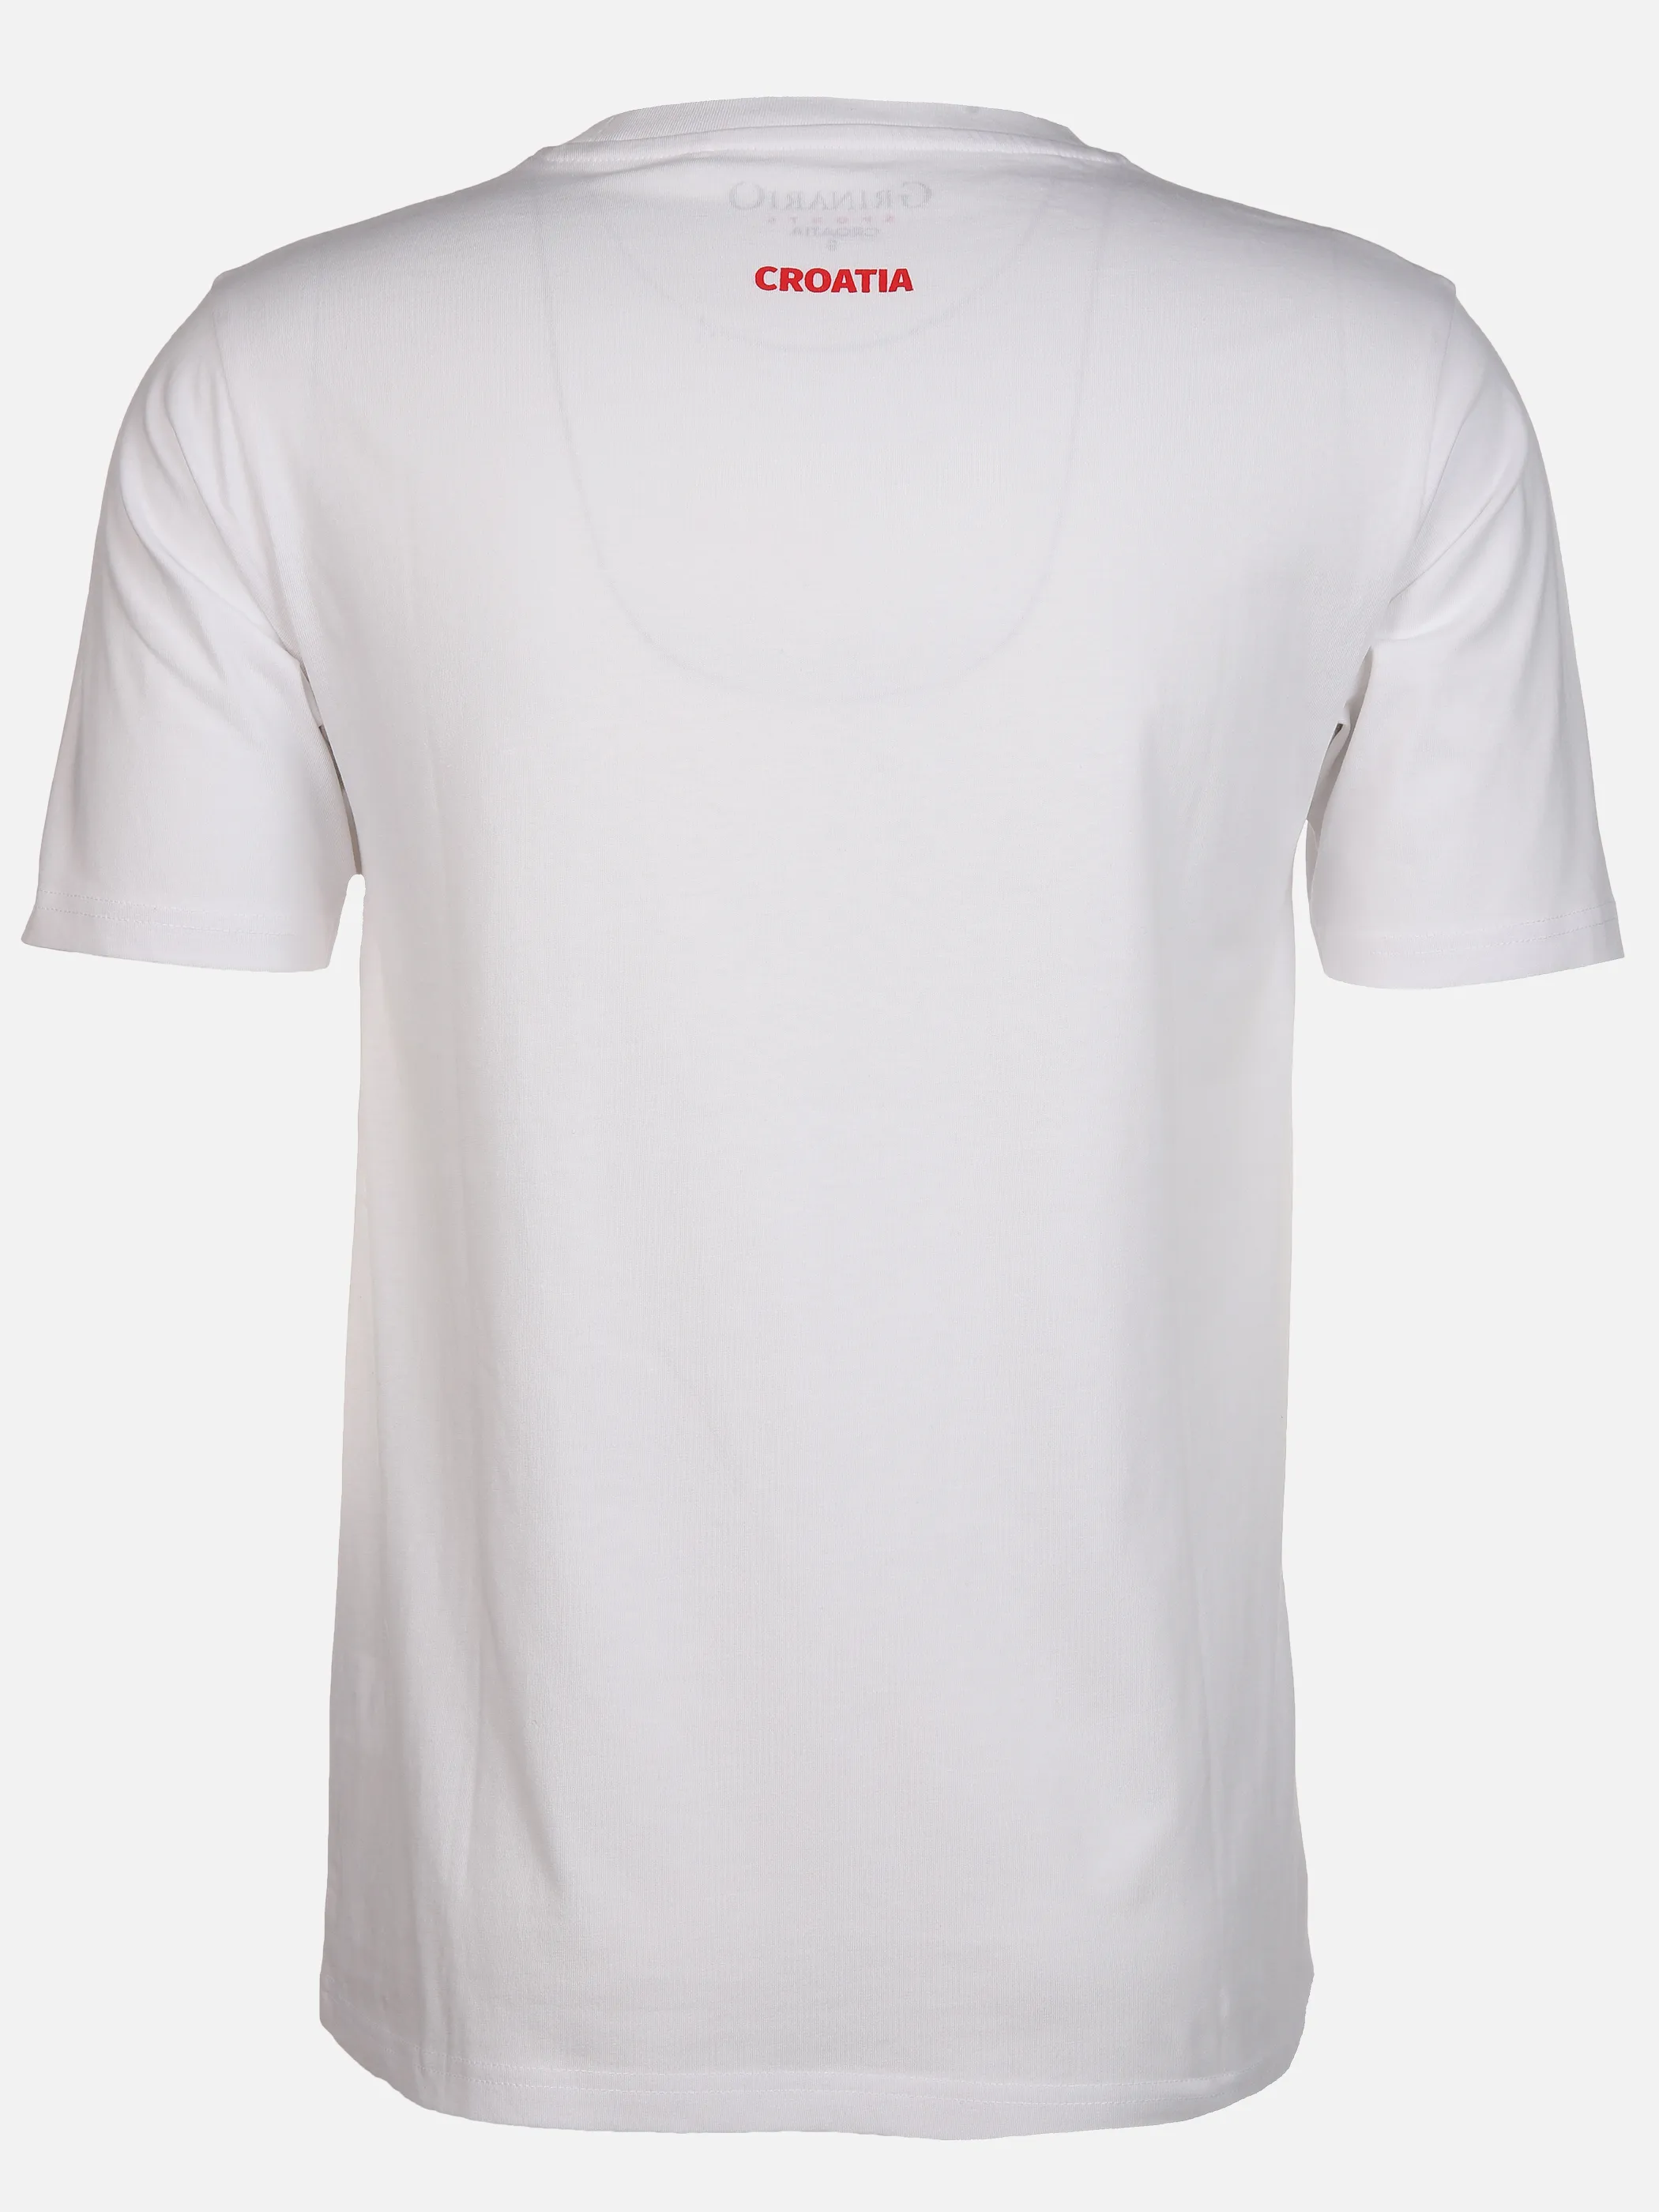 Grinario Sports Unisex T-Shirt EM24 Weiß 889225 W3 2